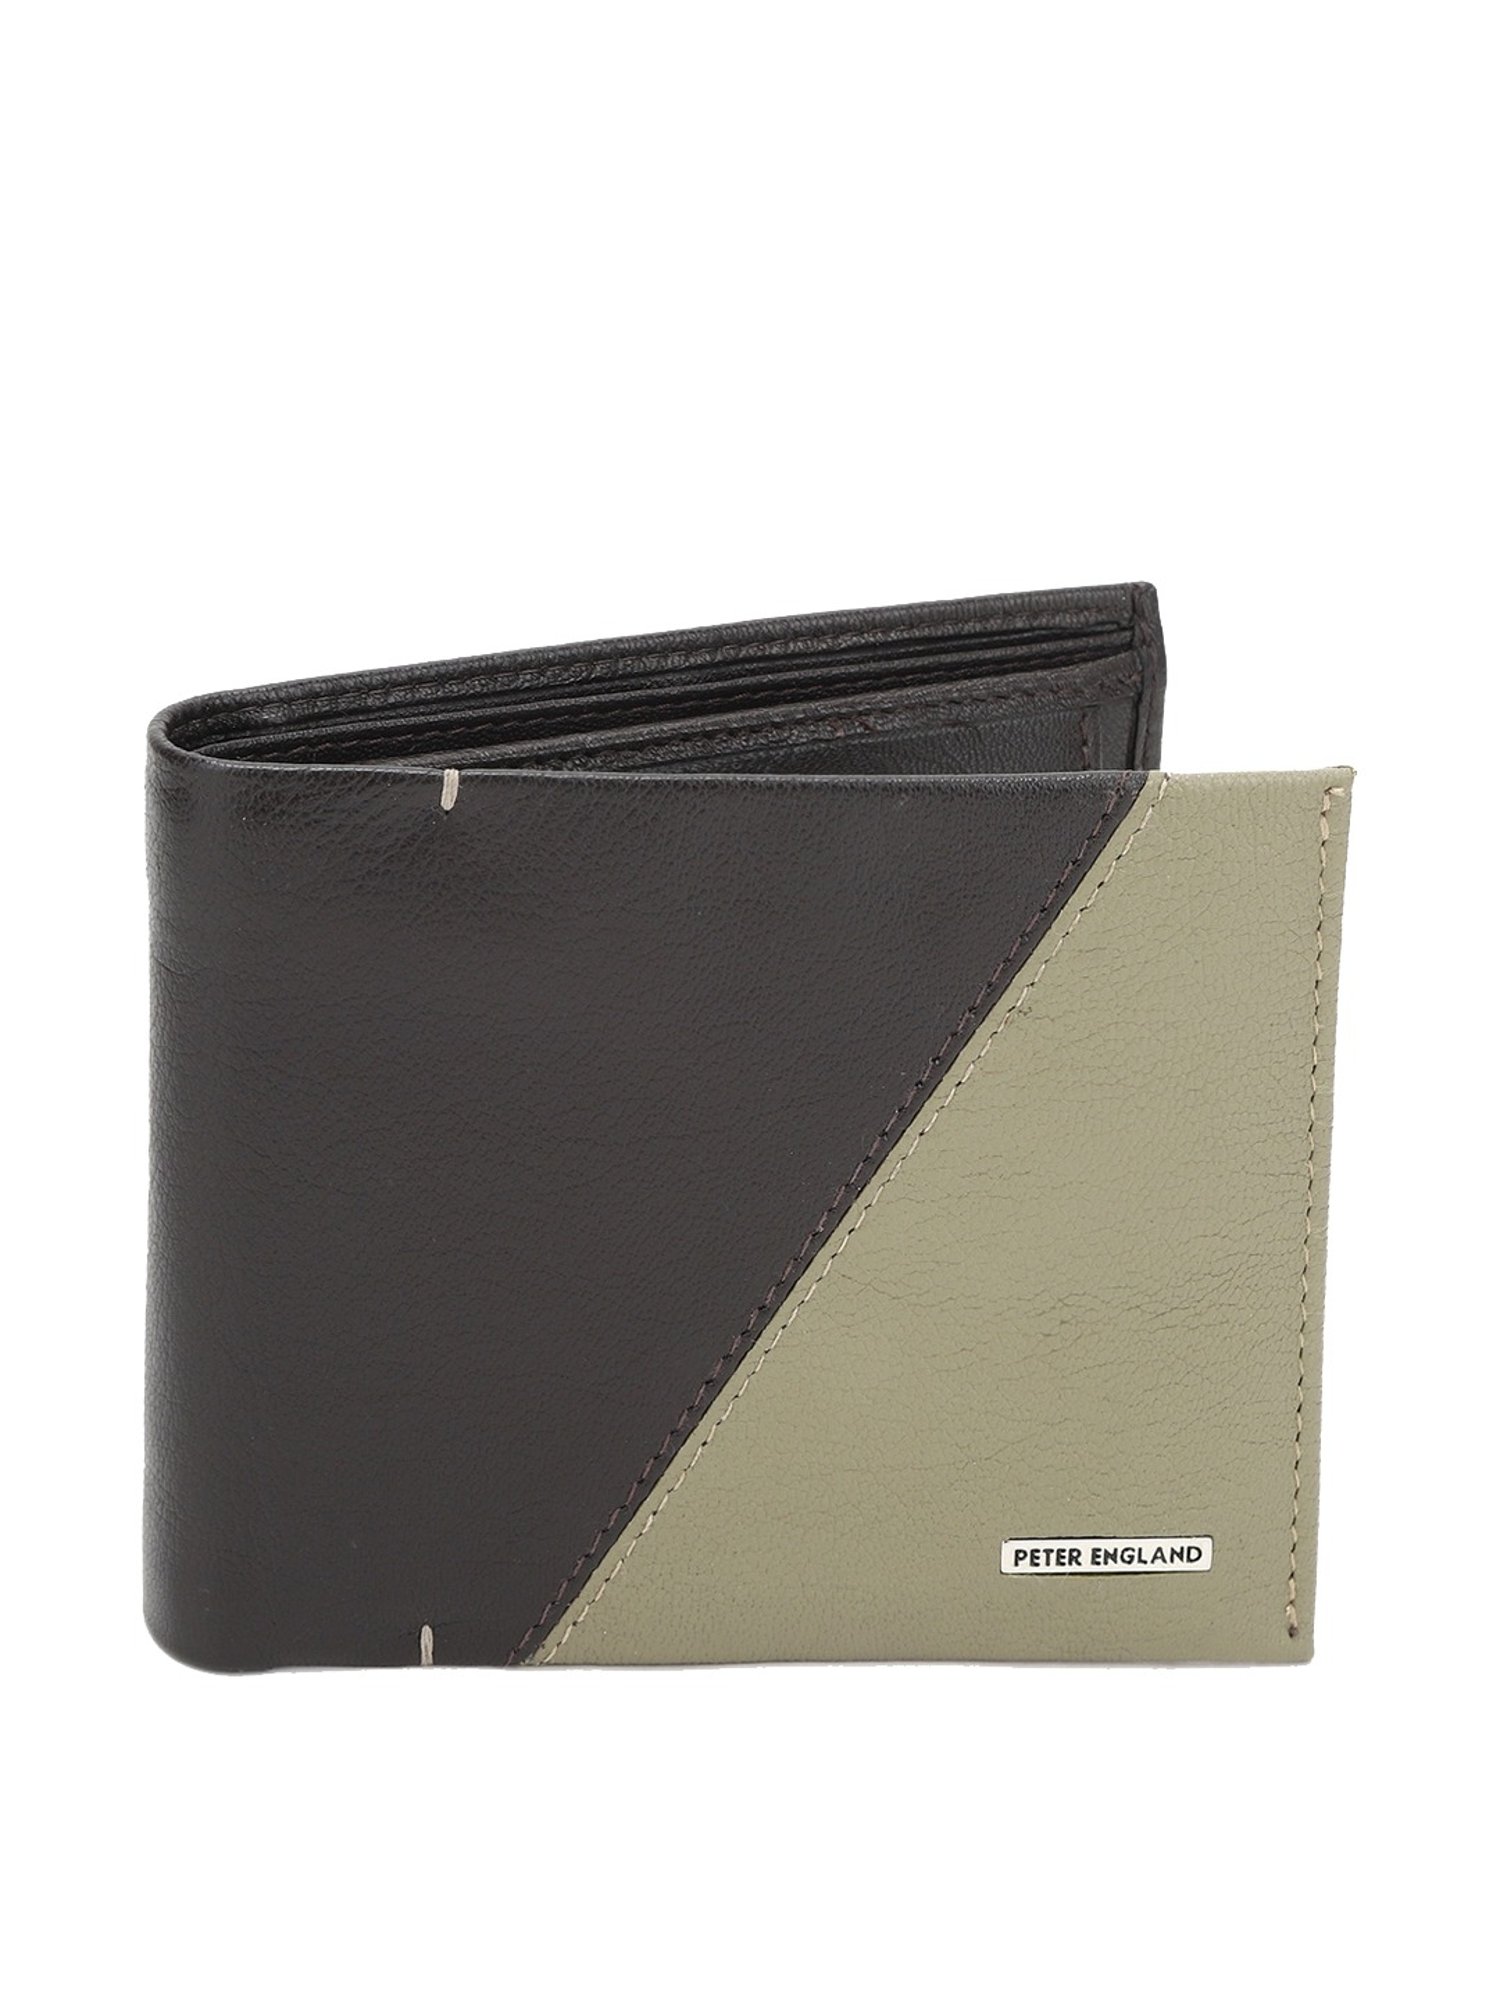 Buy Men Black Solid Leather Wallet Online - 601866 | Peter England